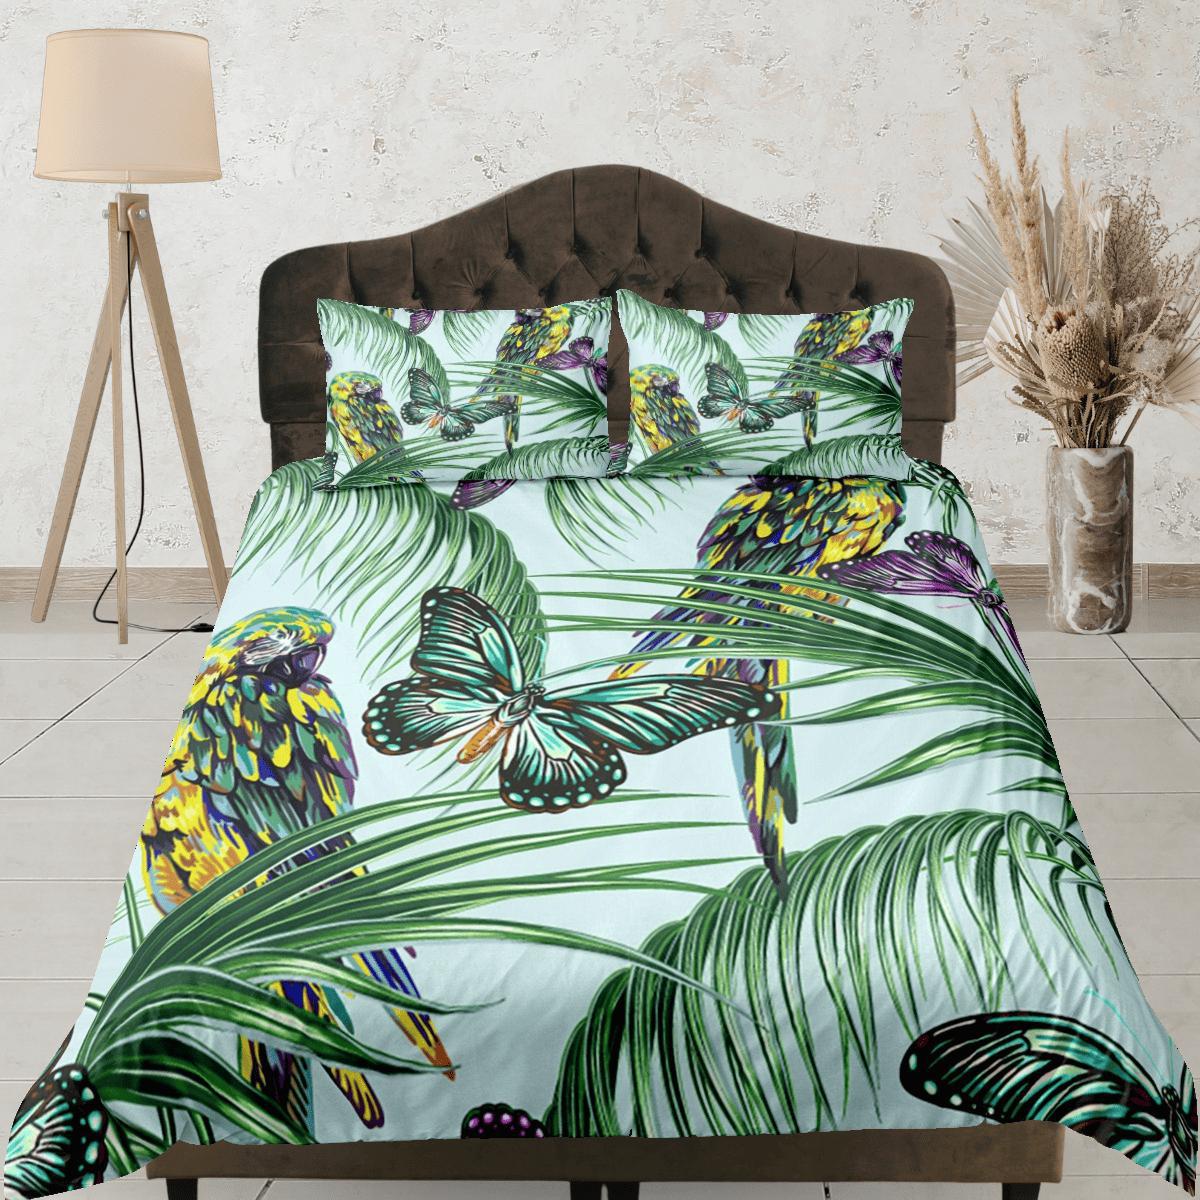 daintyduvet Tropical Butterflies Green Duvet Cover Set Colorful Bedspread, Dorm Bedding Pillowcase, Comforter Cover Twin